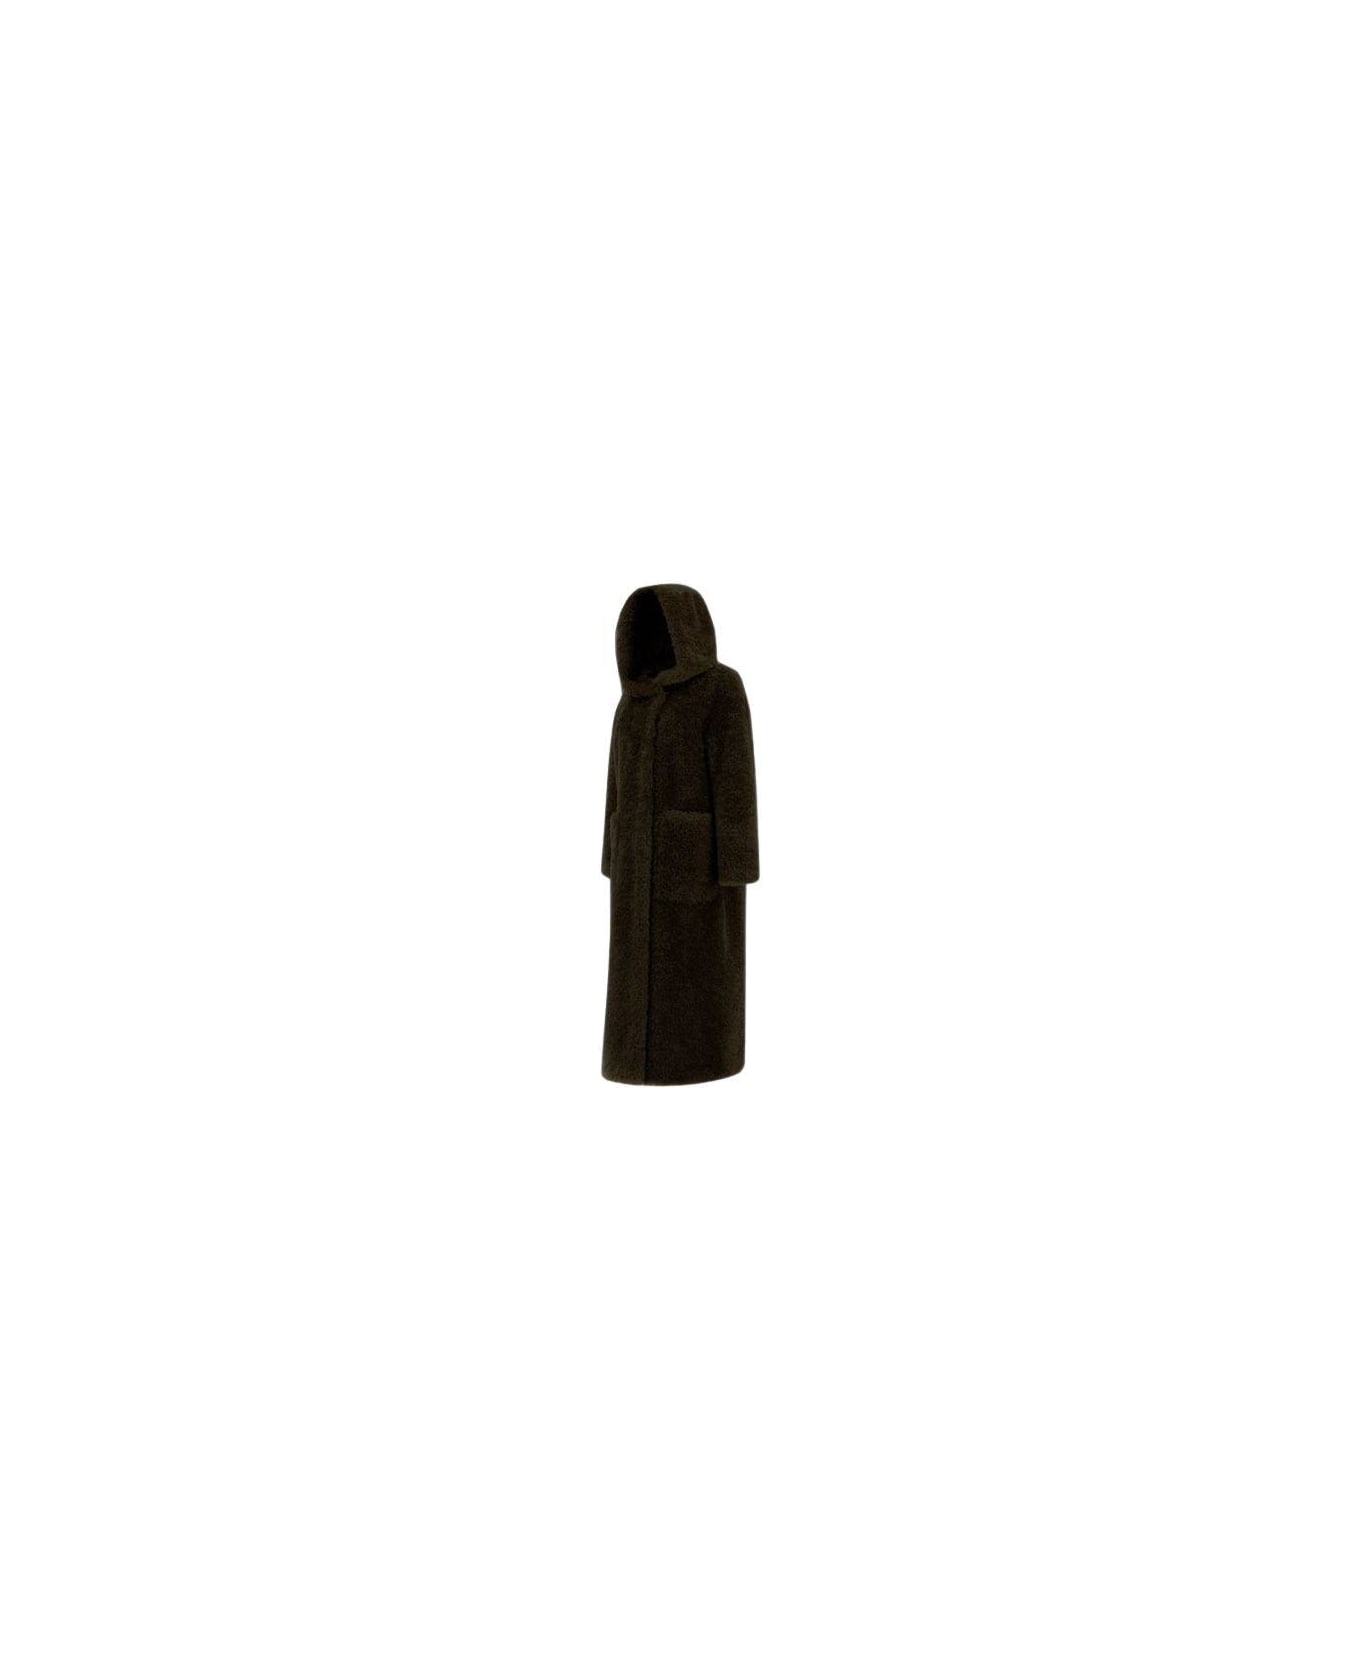 Herno Long Sleeved Hooded Coat - Black